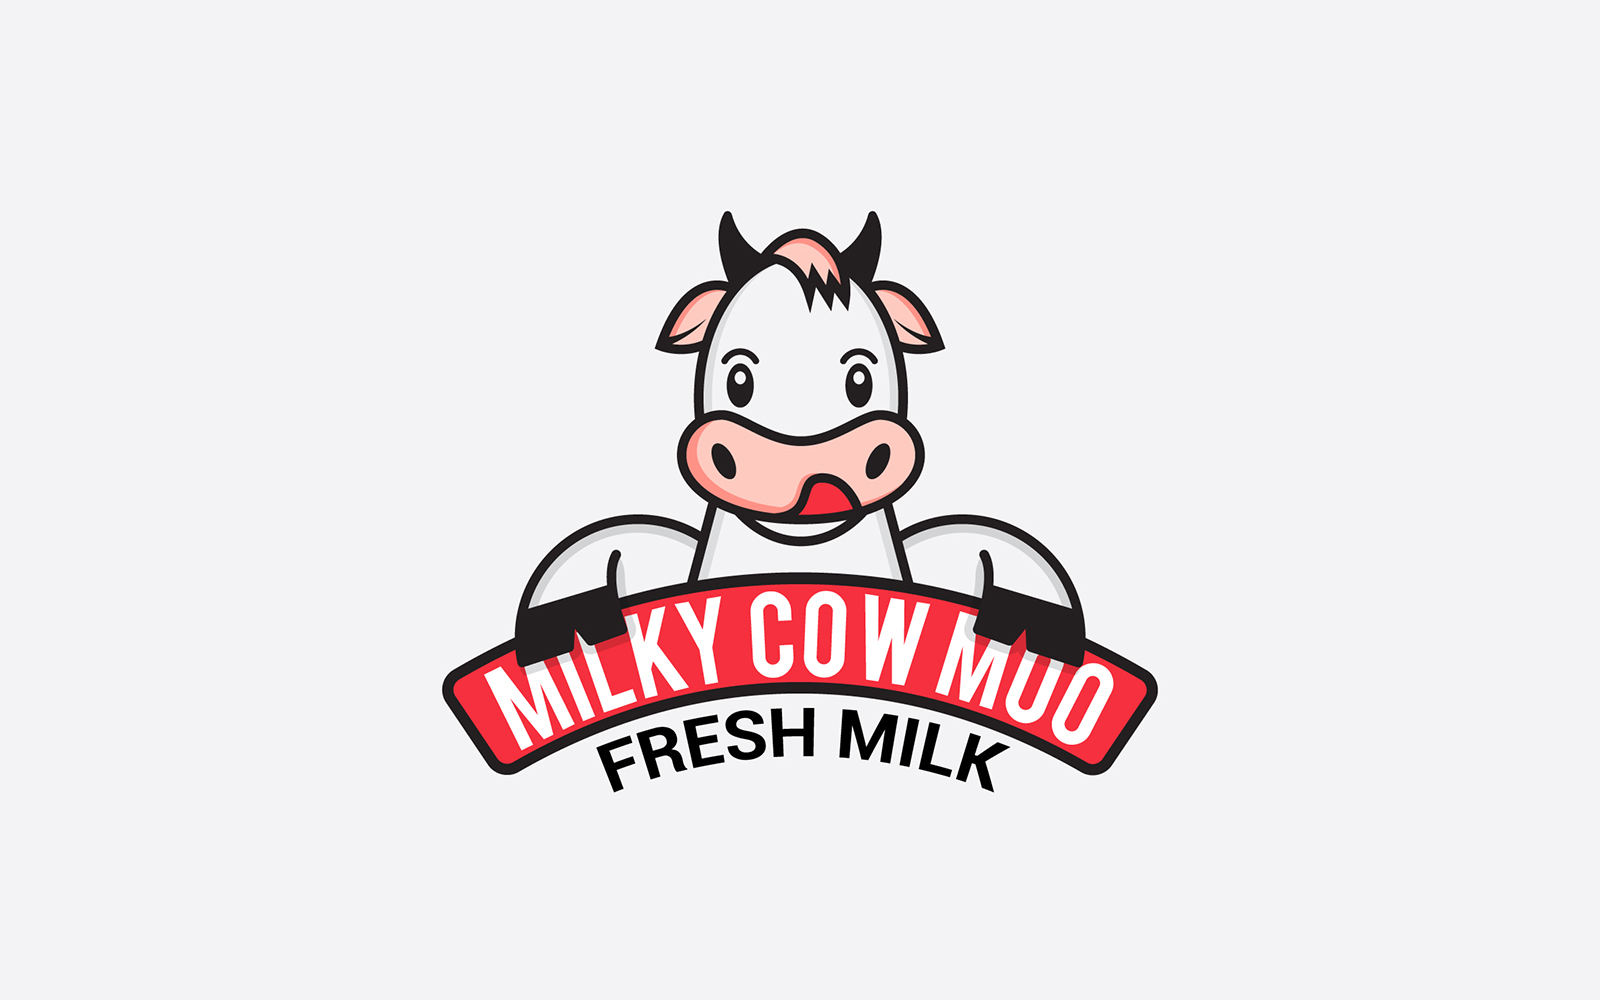 Milky Cow Moo Logo Design Template